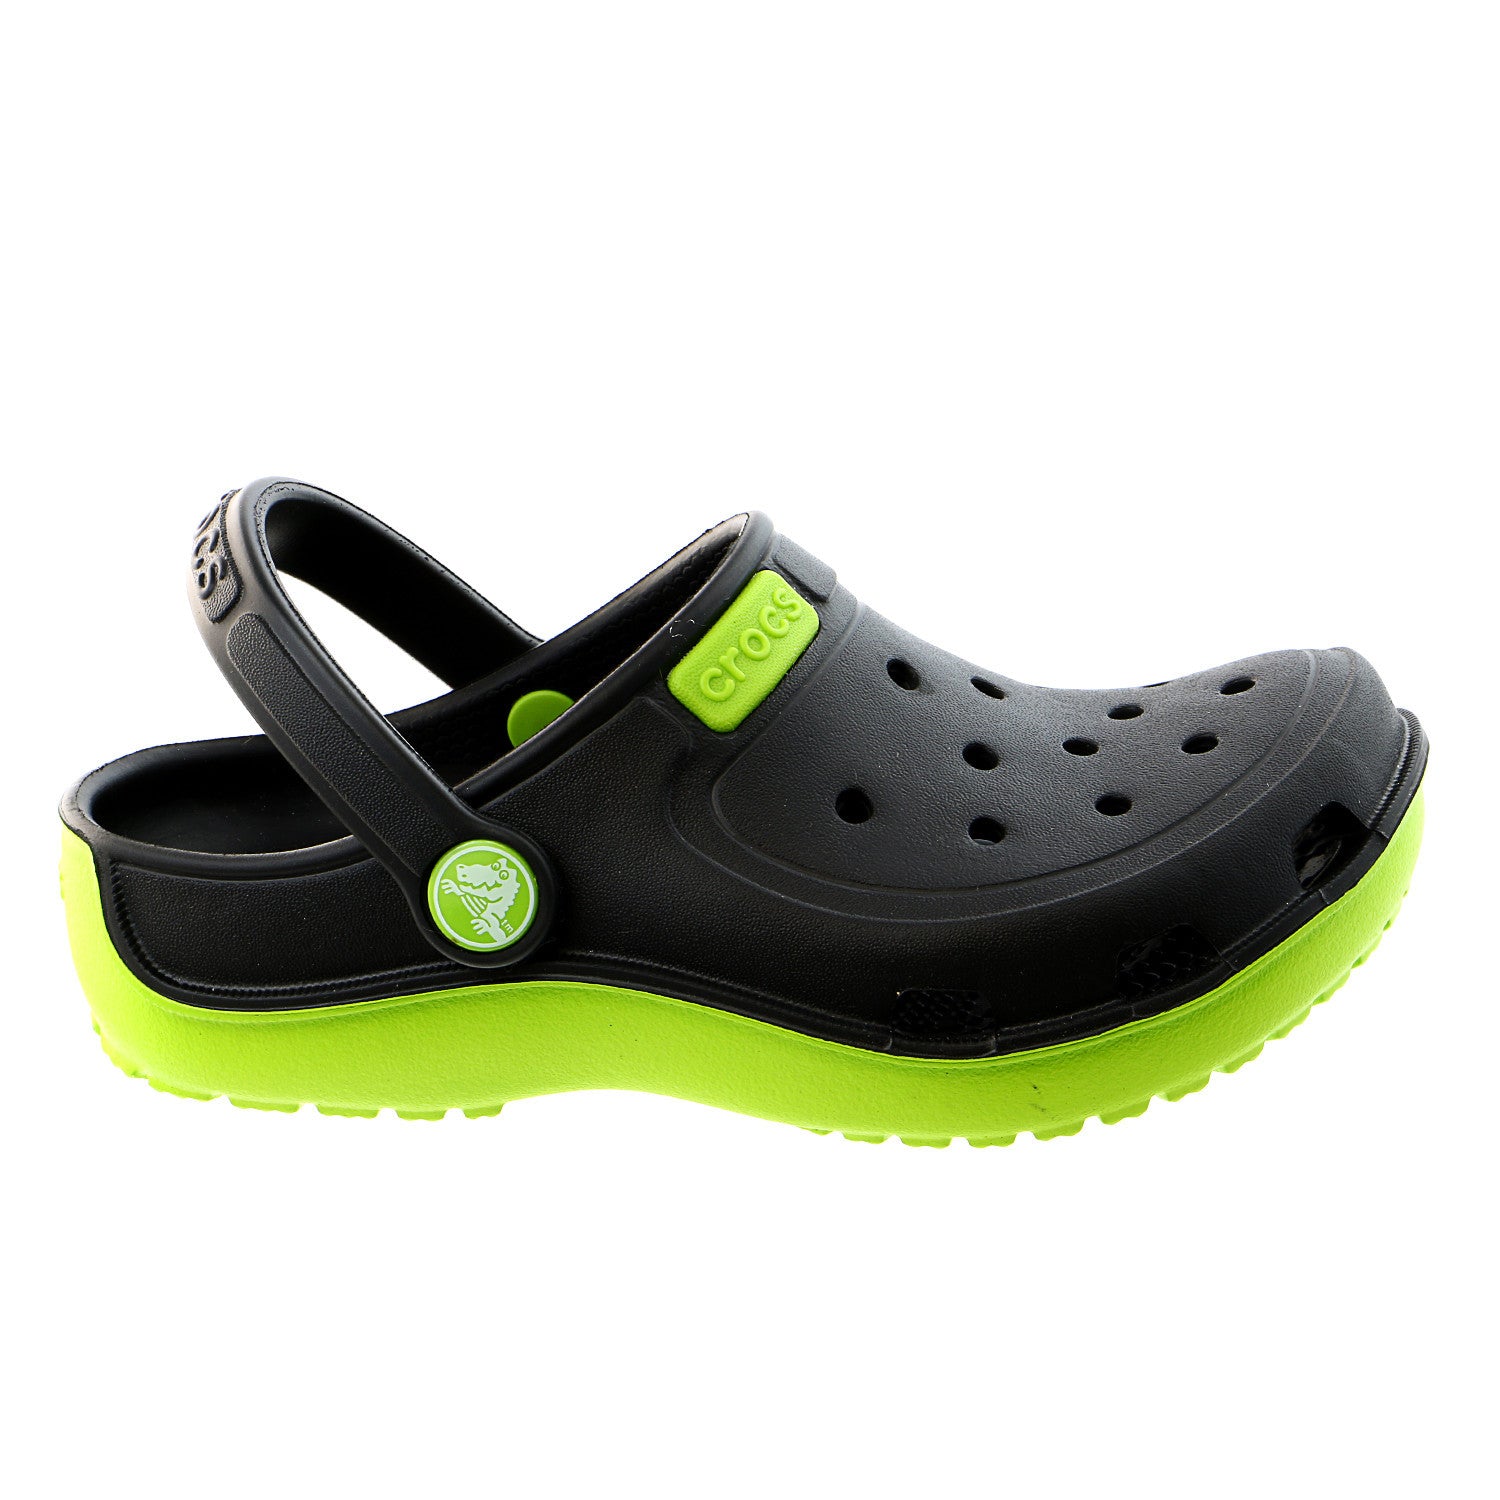 toddler girl crocs size 6